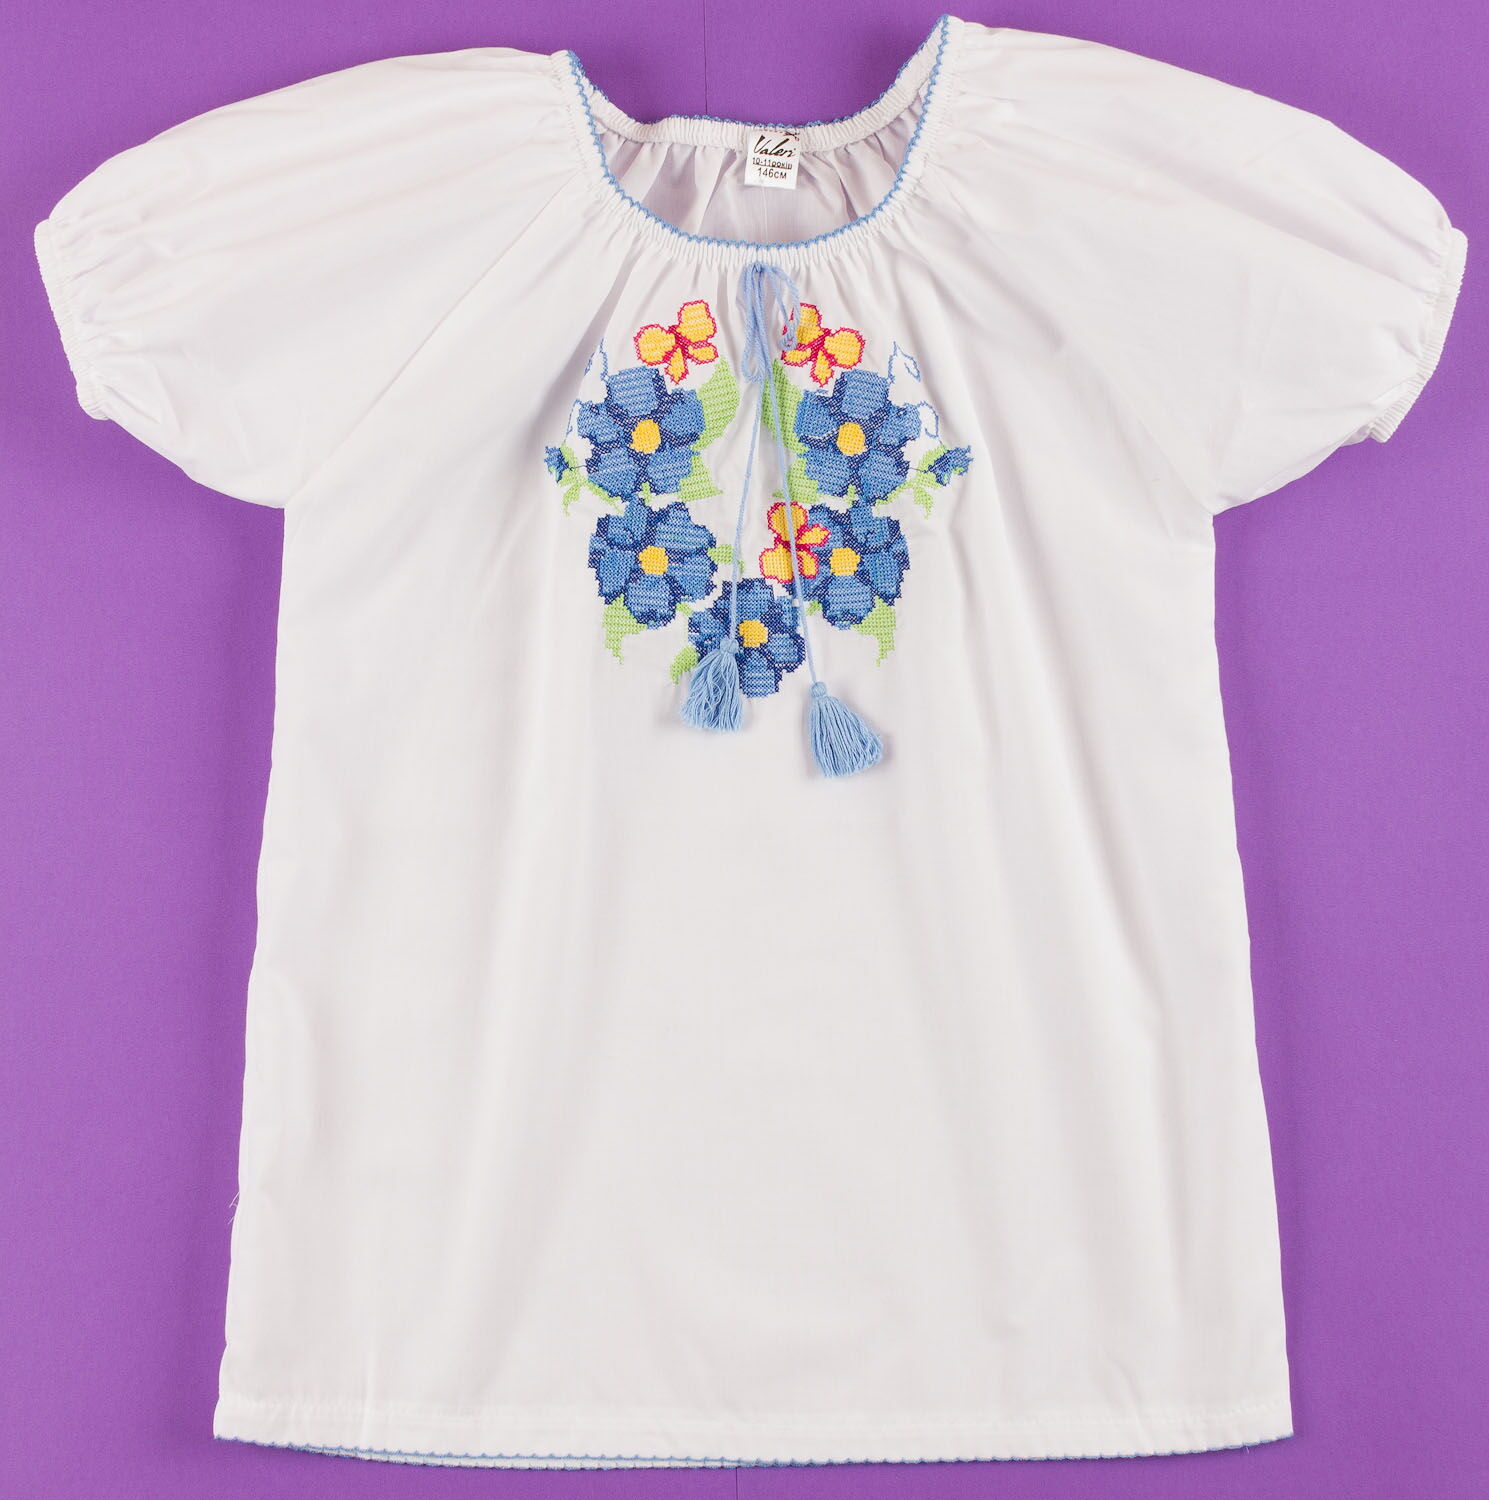 Вышиванка-блузка с коротким рукавом для девочки Valeri tex 1793-20-311  - цена